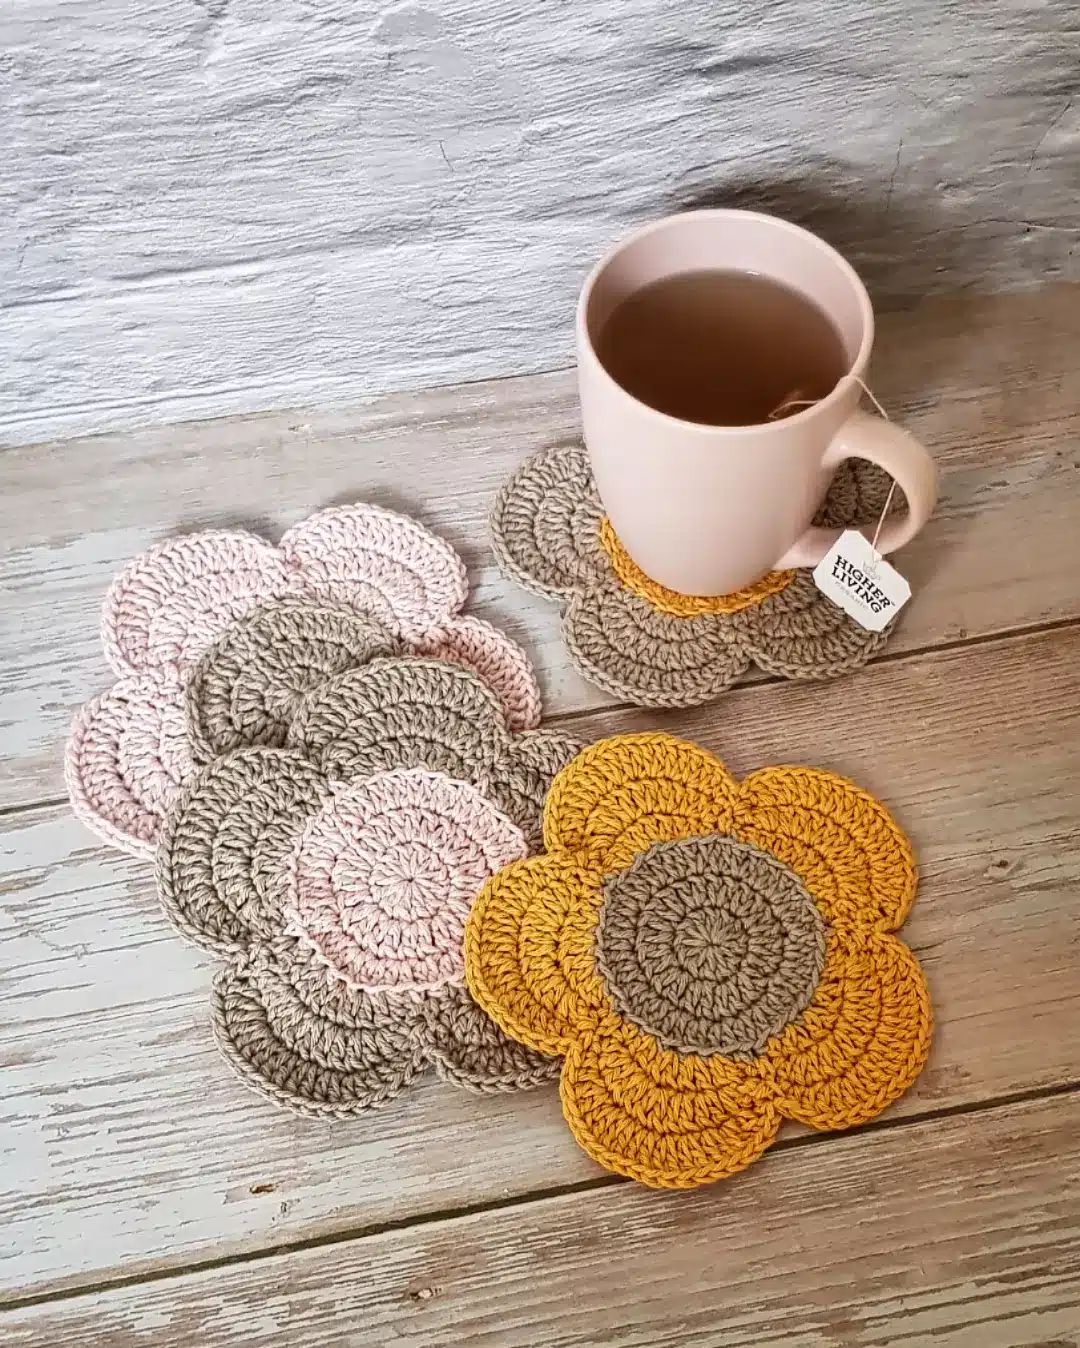 Crochet flower coasters set of 4 by Kitsy